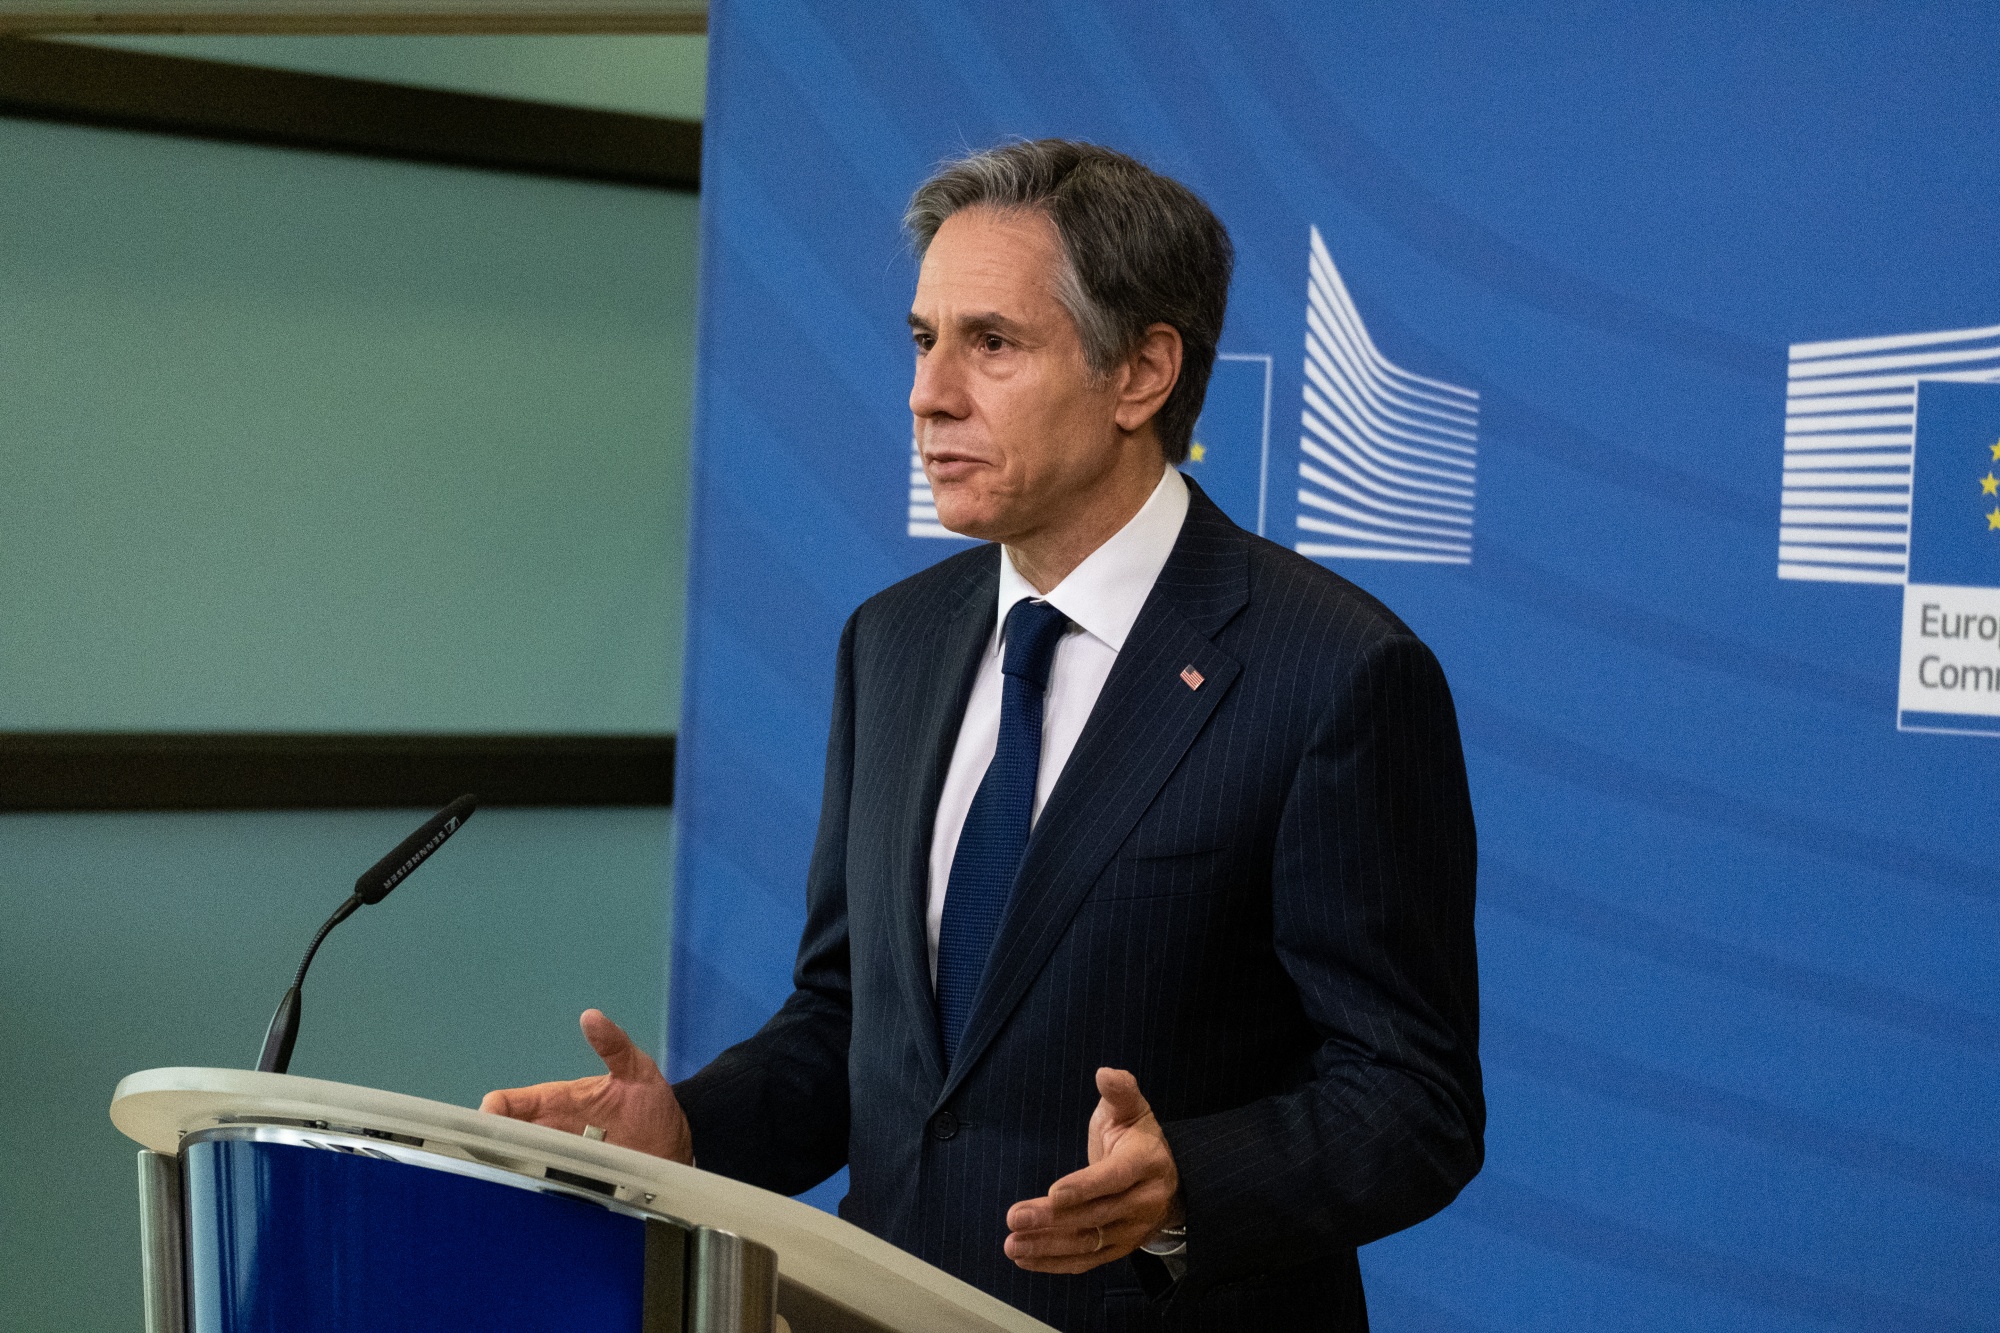 Blinken Is Set to Return to Brussels for More NATO Meetings - Bloomberg